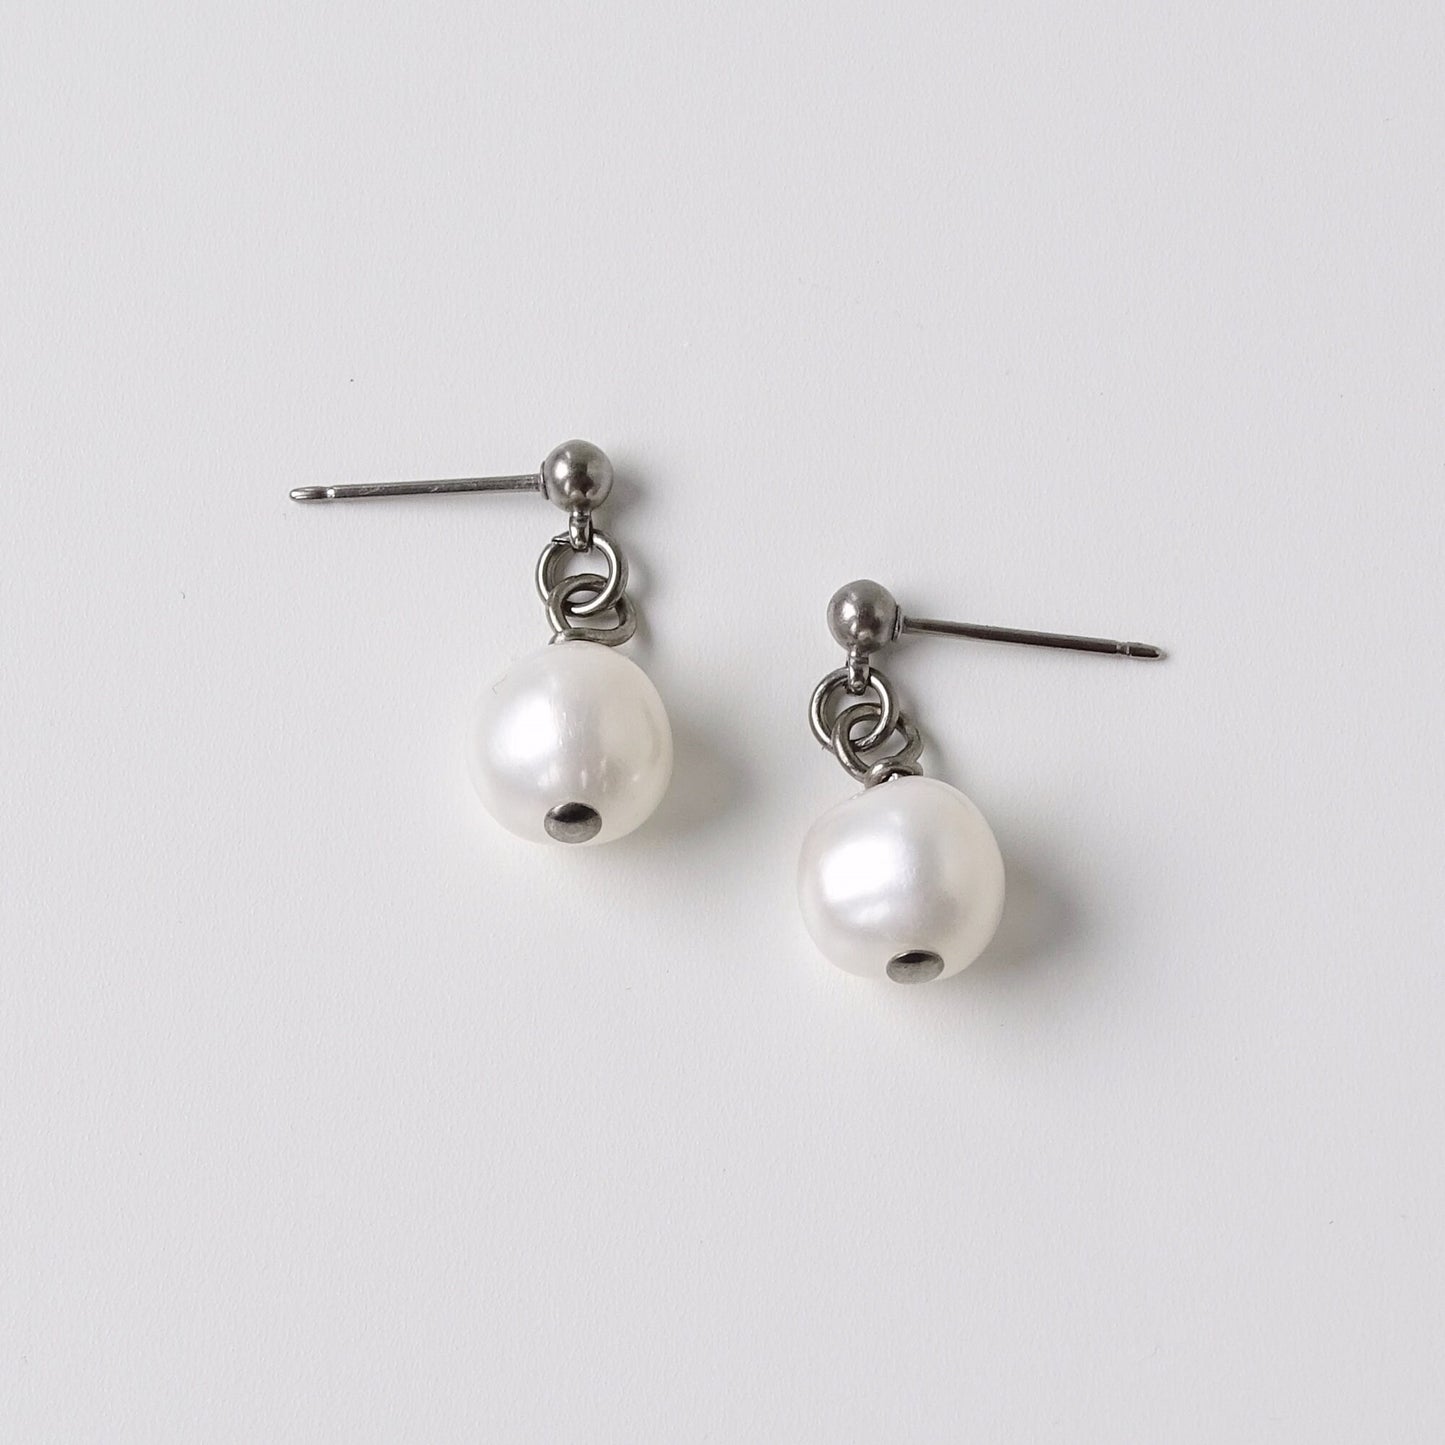 White Pearl Dangle Ball Stud Earrings, Titanium Posts Earrings for Sensitive Ears Freshwater Pearls Hypoallergenic Nickel Free Earrings